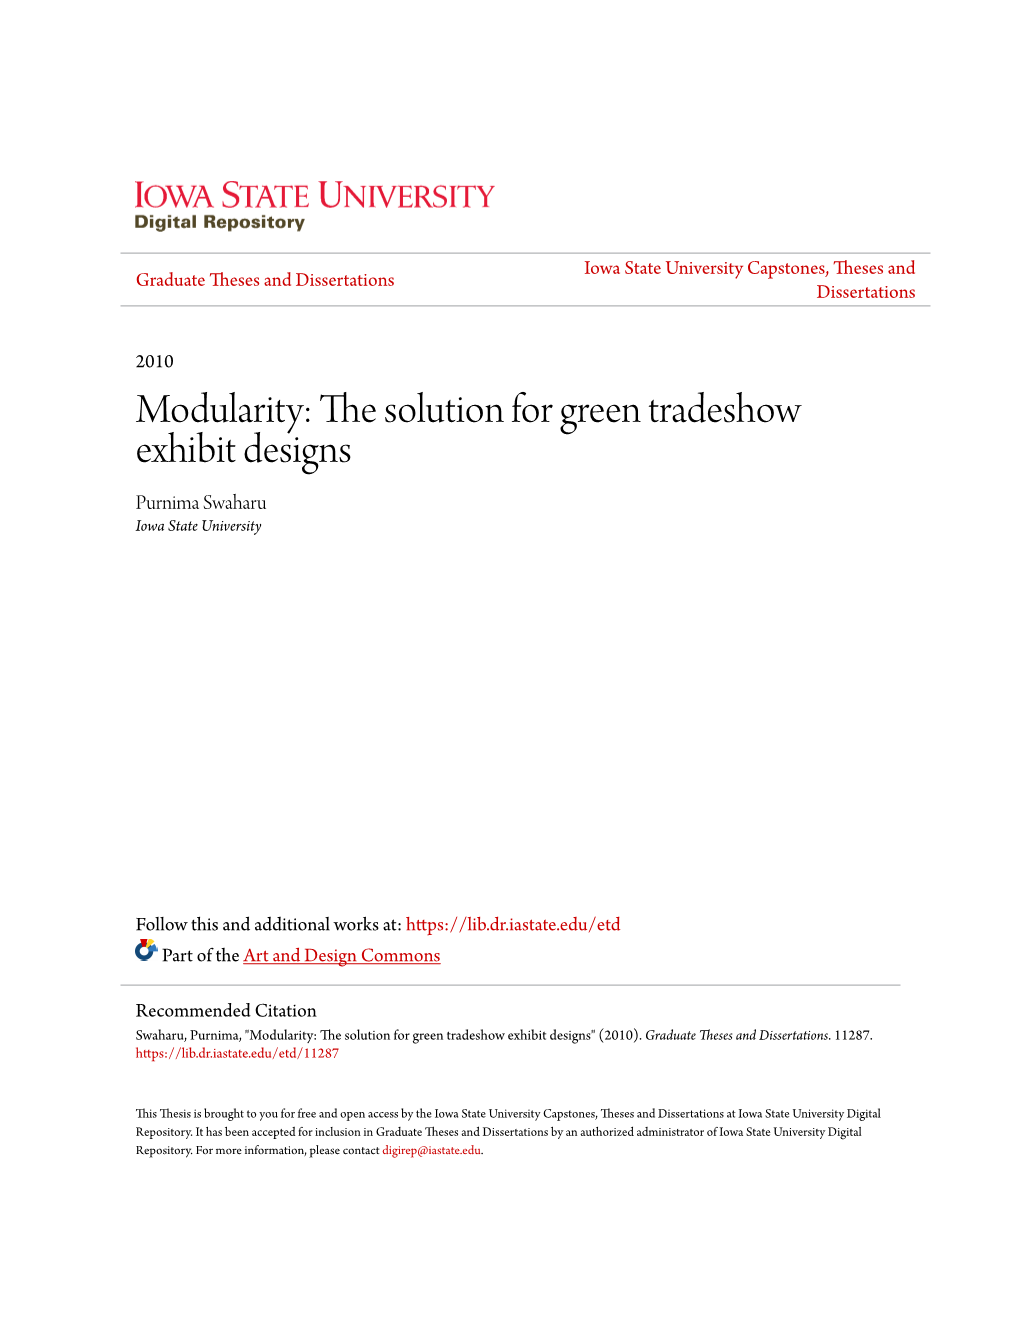 Modularity: the Solution for Green Tradeshow Exhibit Designs Purnima Swaharu Iowa State University